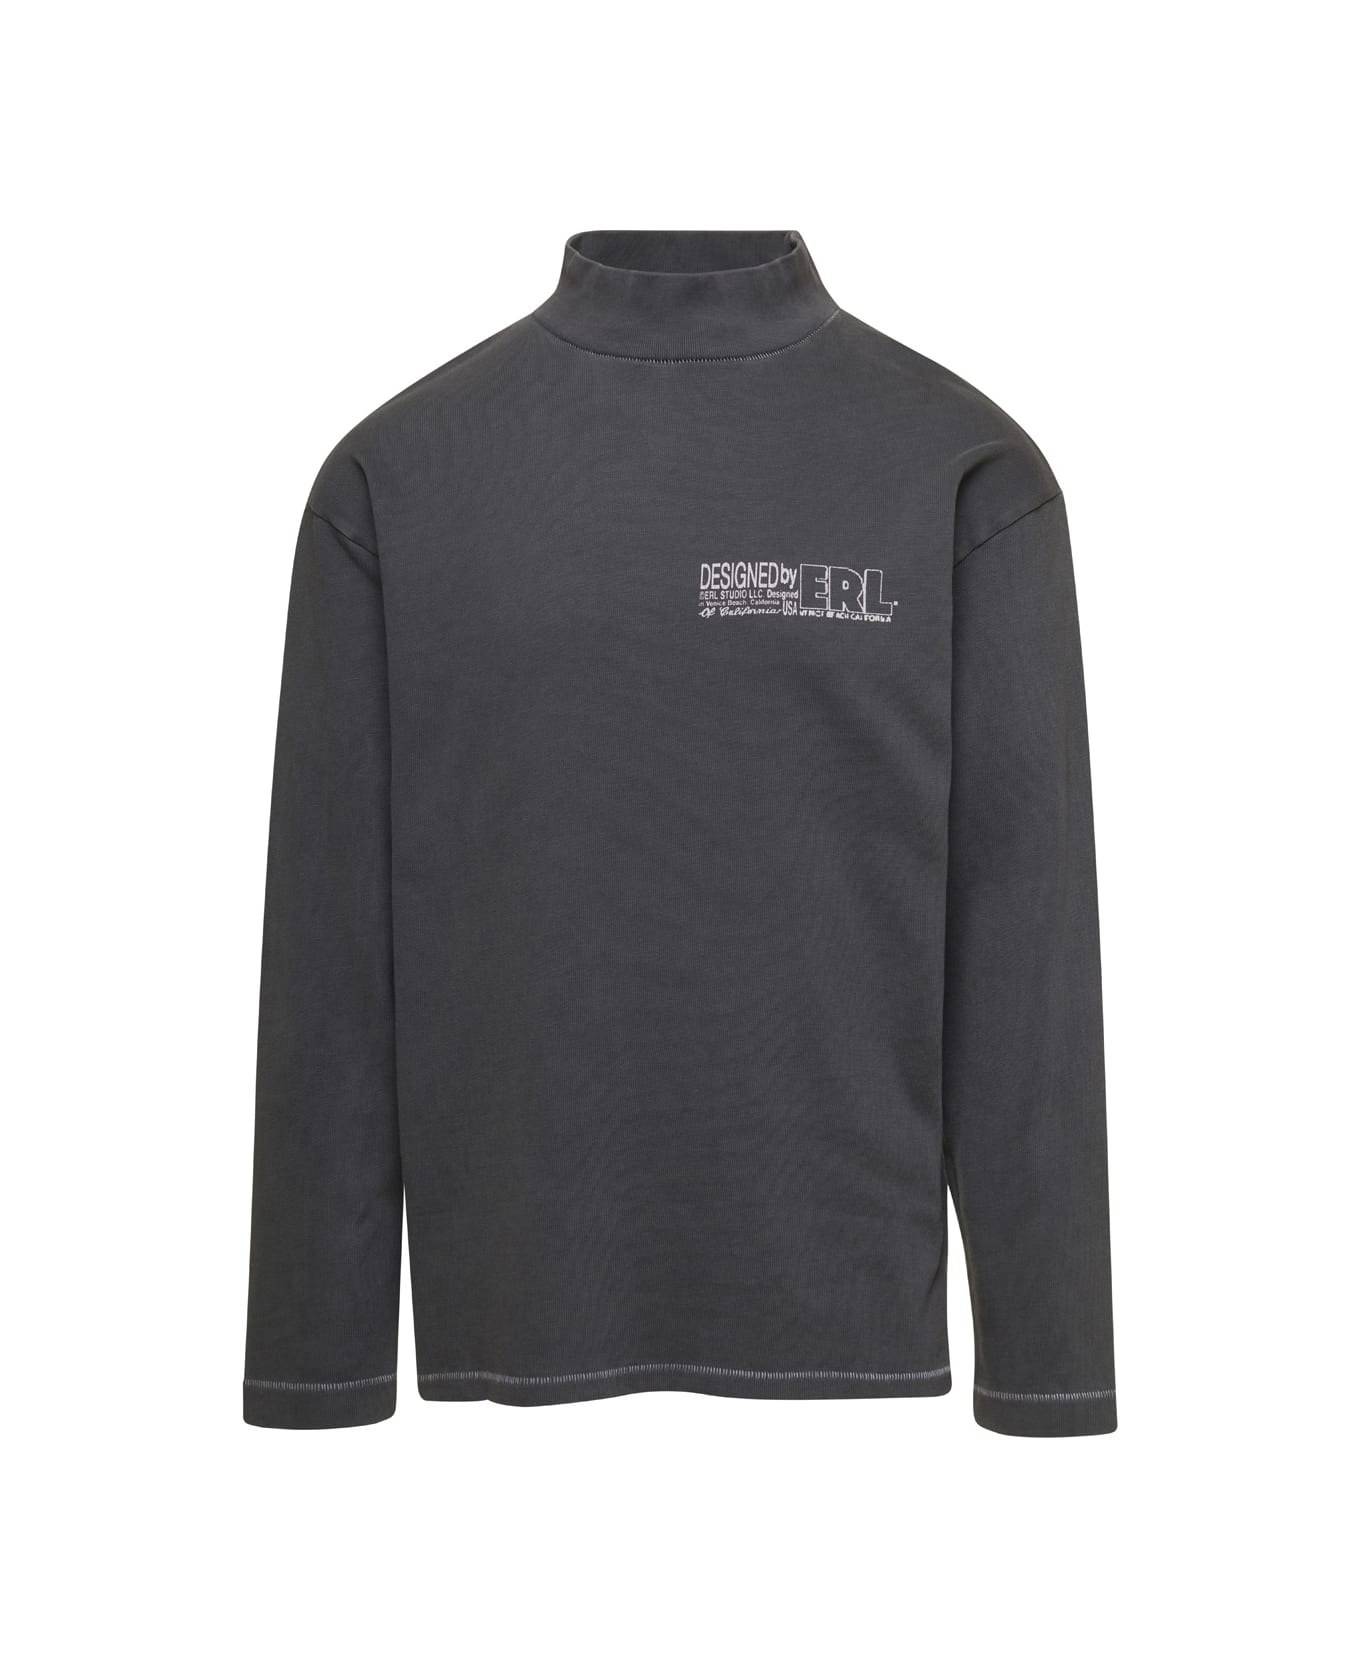 ERL Unisex Make Believe Erl Longsleeve Tshirt Knit - GREY ニットウェア